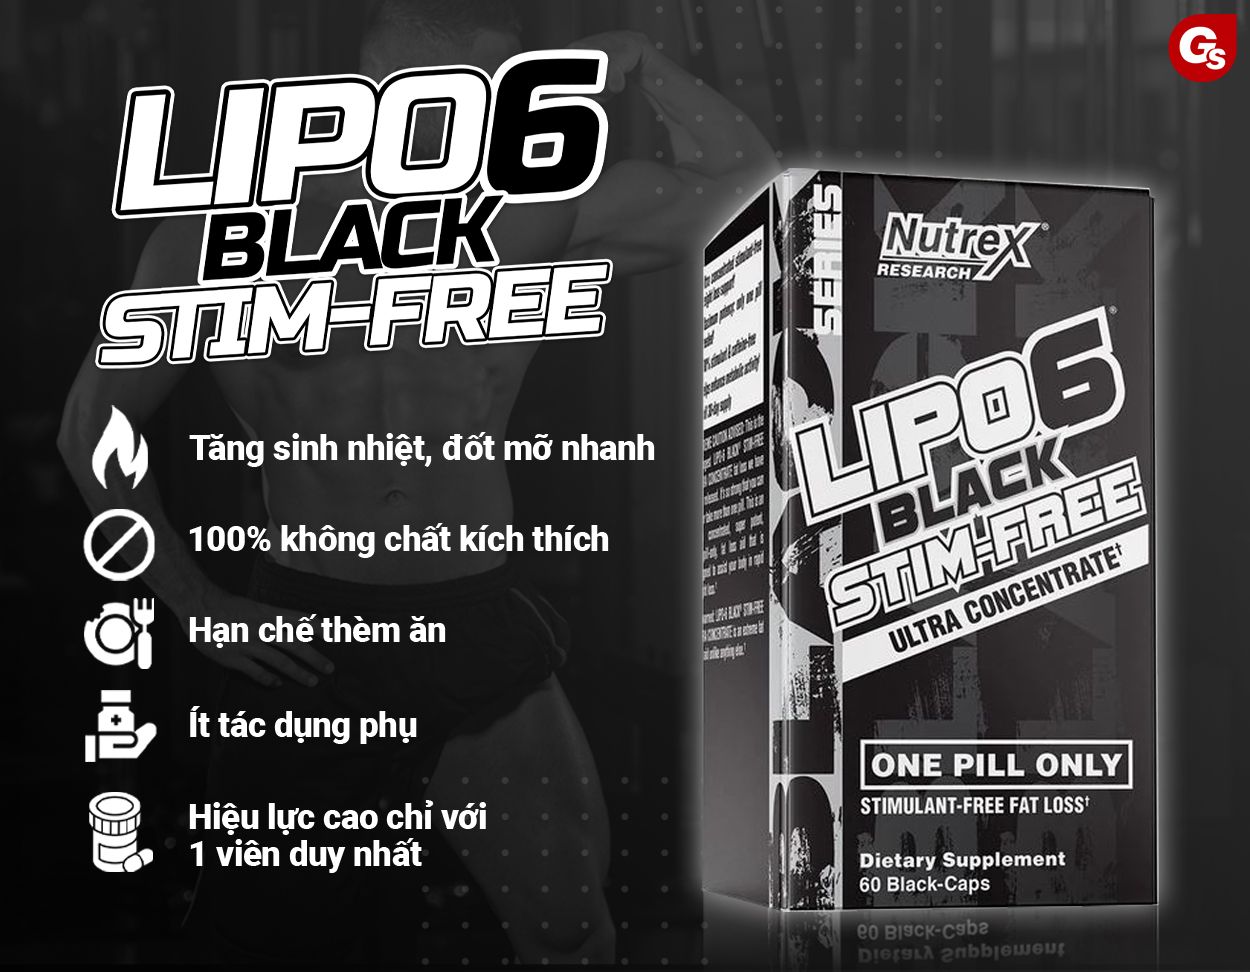 cong-dung-cua-lipo-6-black-stim-free-gymstore